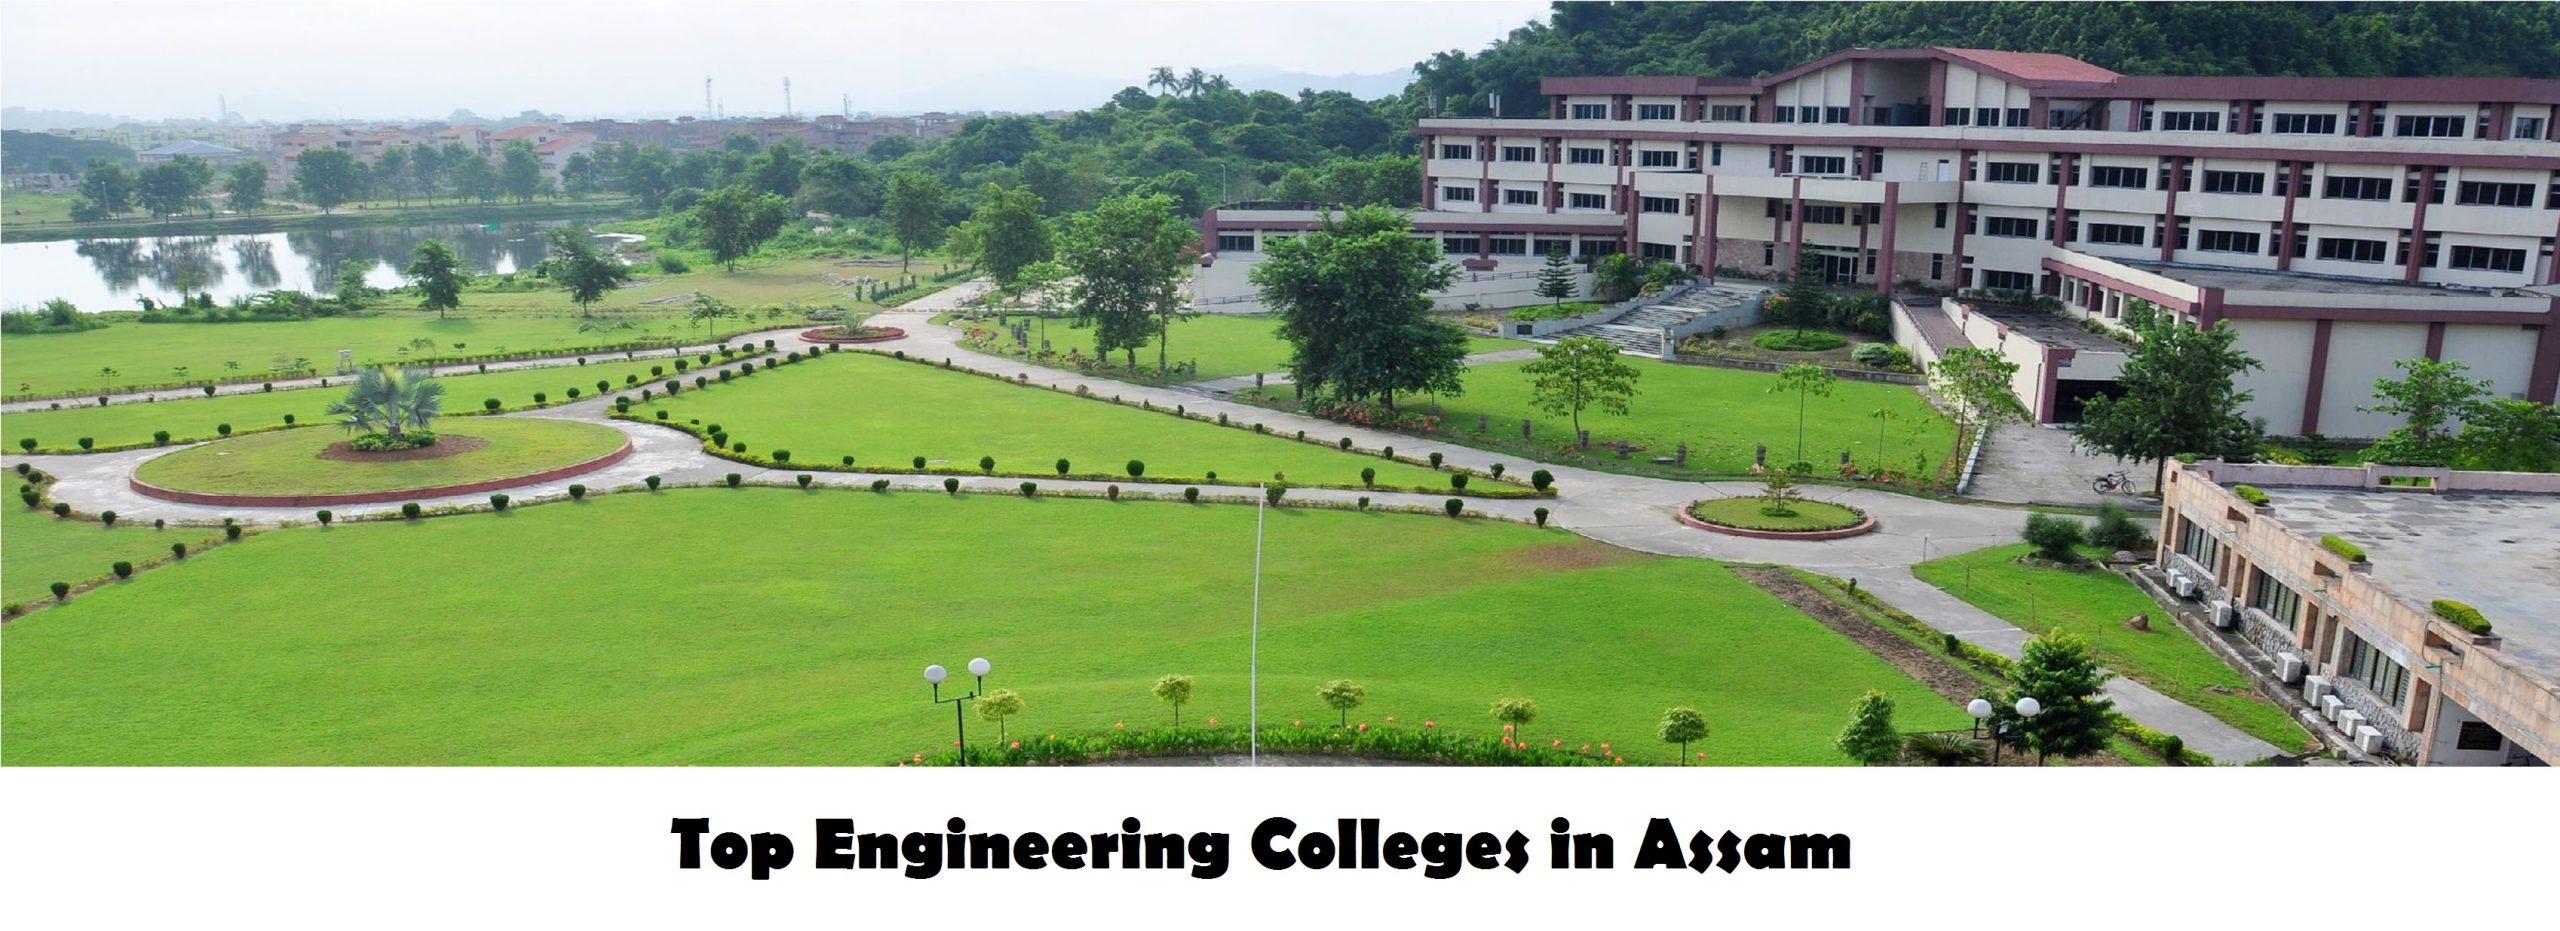 Top Engineering Colleges in Assam